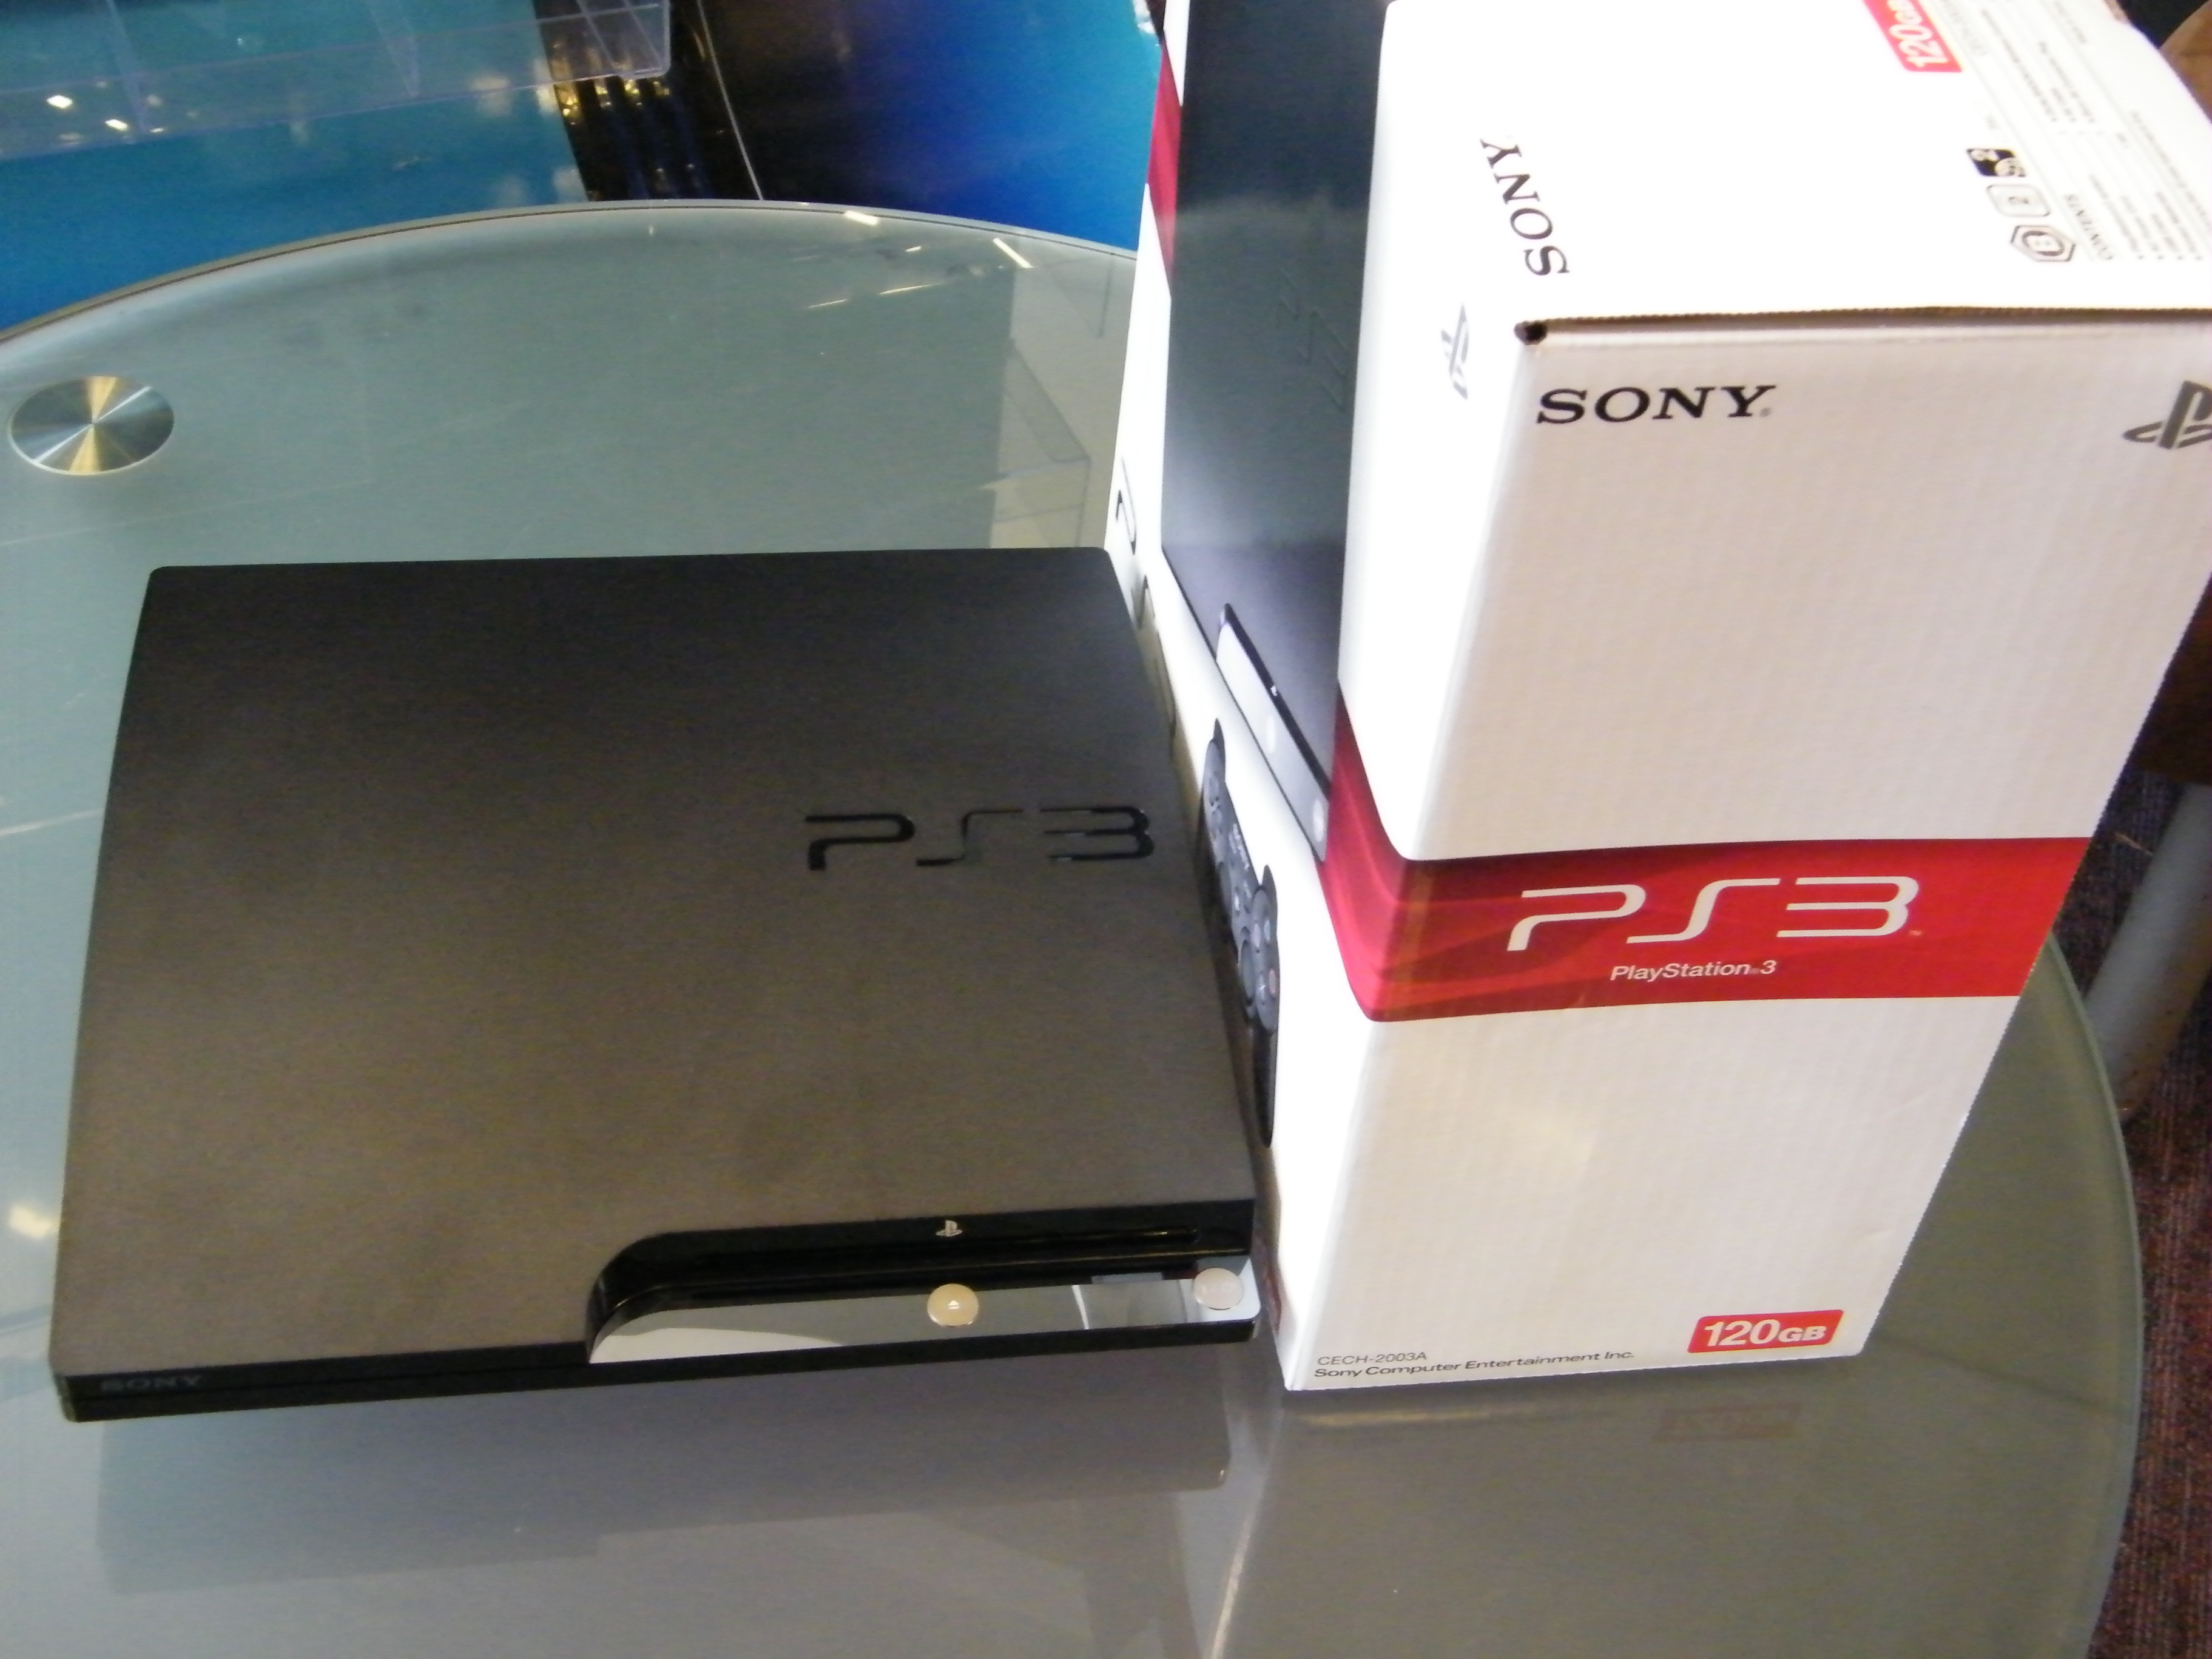 Sony confirms PS3 Slim bundles for UK TechRadar